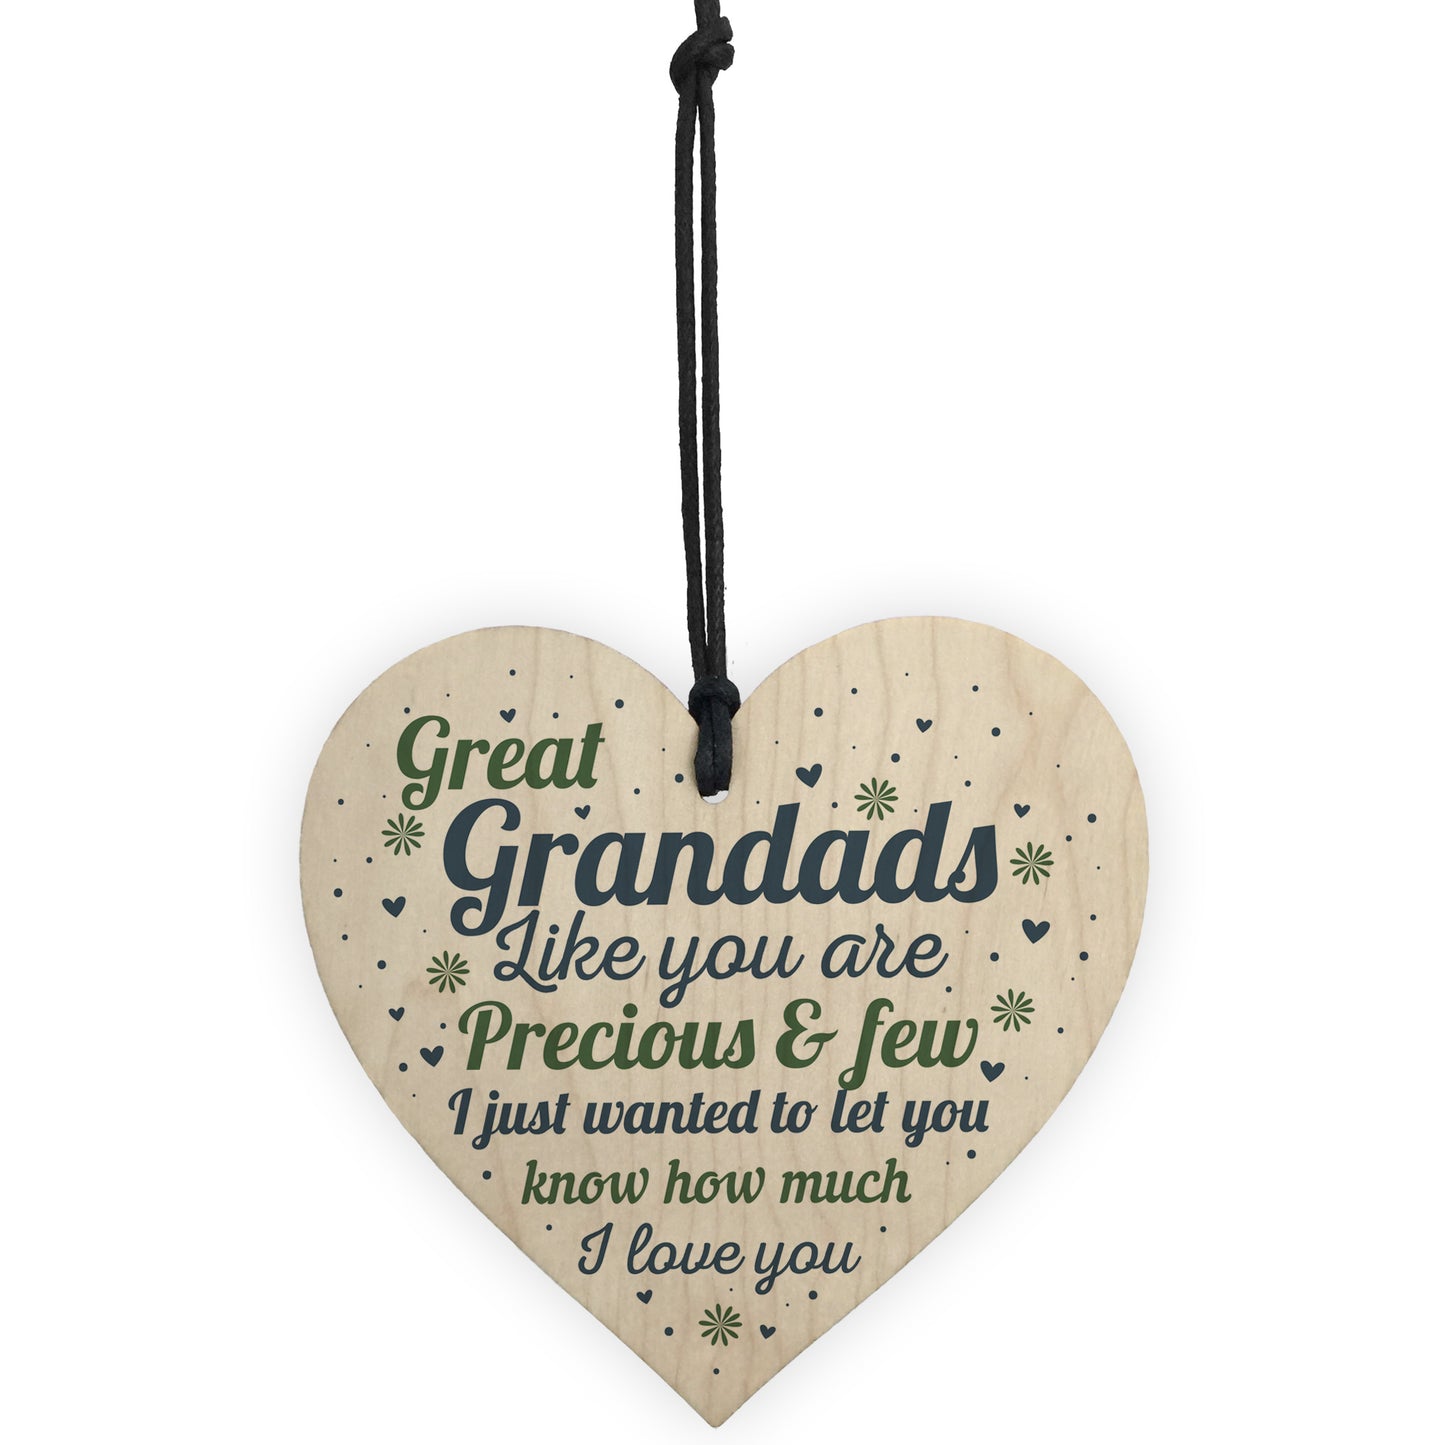 Great Grandad Card Birthday Christmas Gift Wooden Heart Ornament